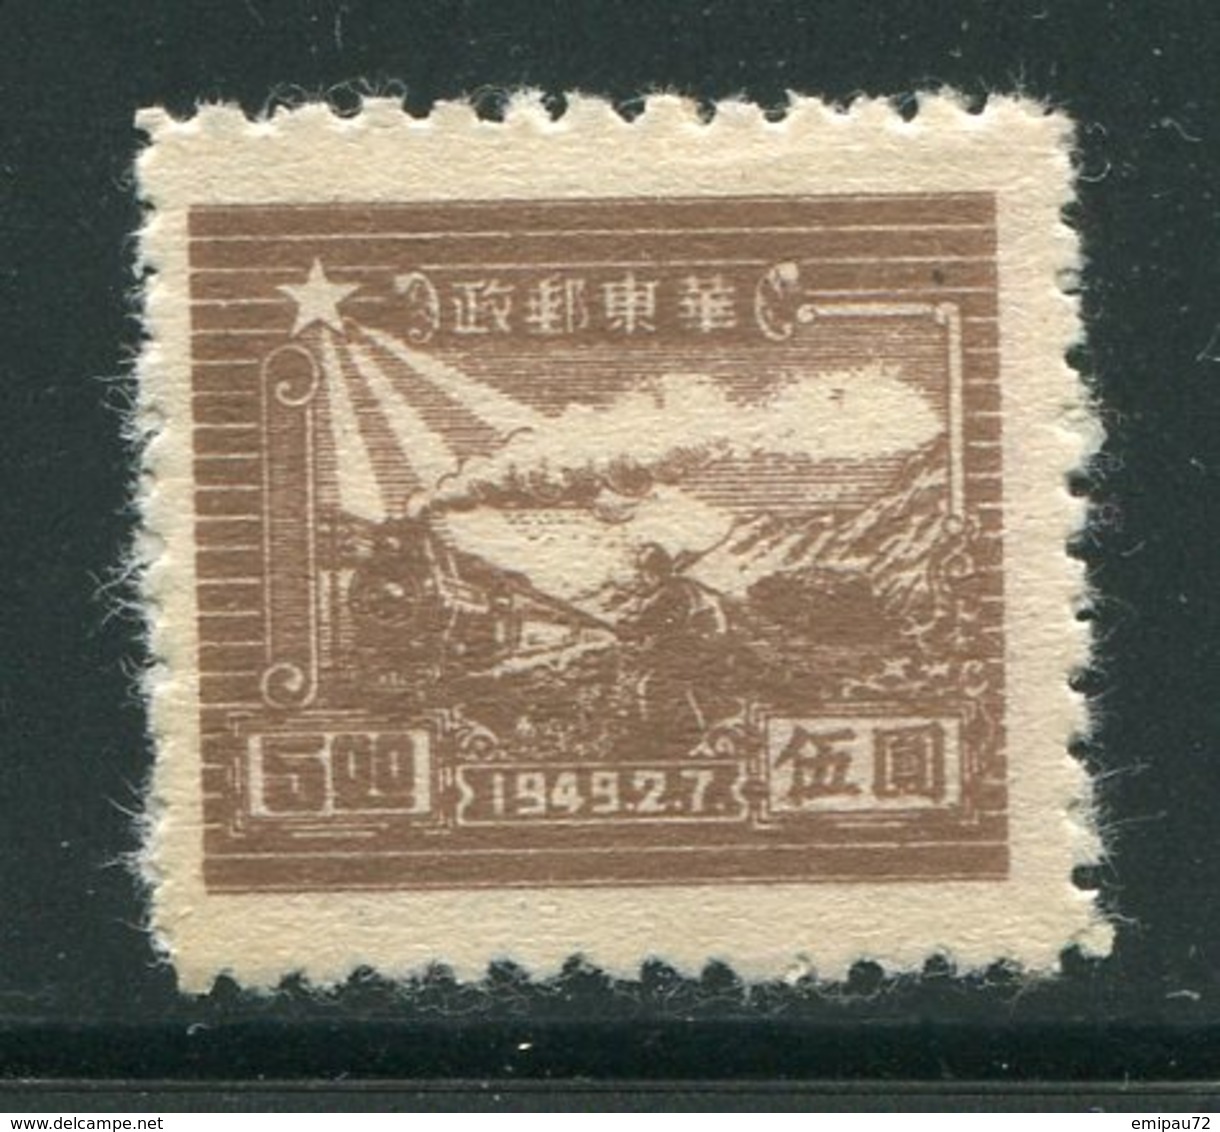 CHINE ORIENTALE- Y&T N°15 (A)- Neuf - China Oriental 1949-50